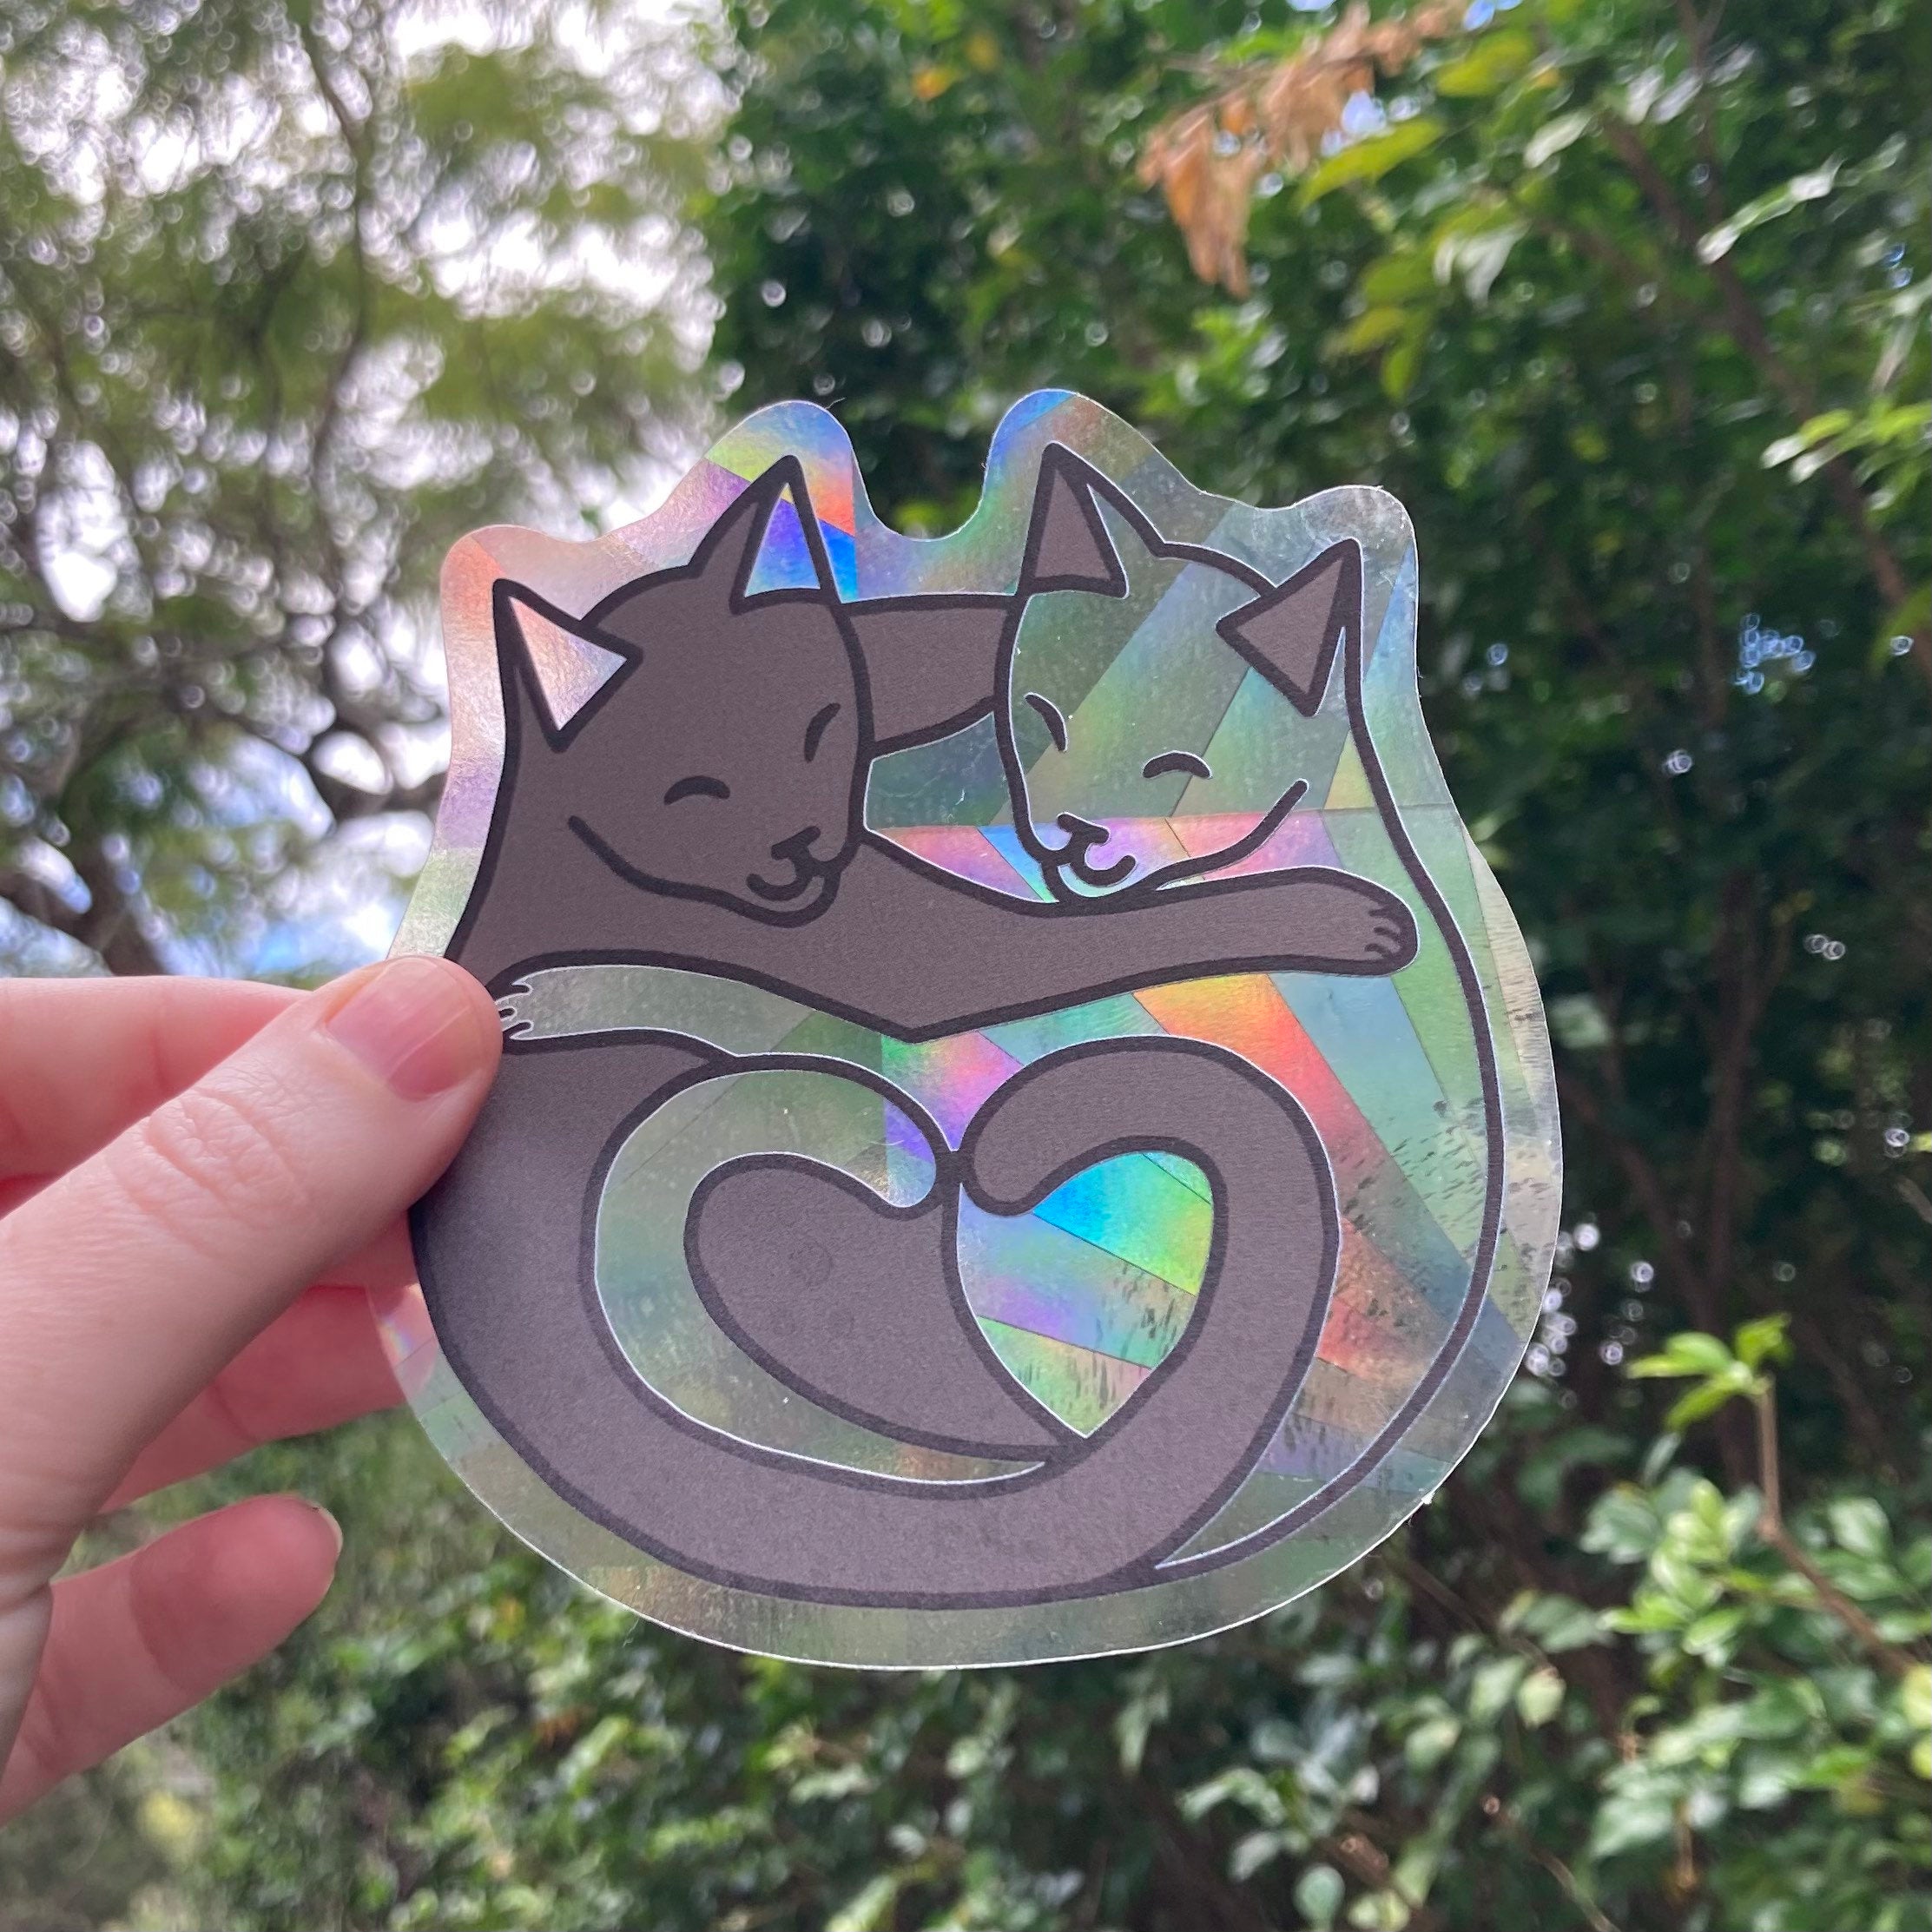 Cuddling Cats Prismatic Rainbow Suncatcher Decal Sticker - 4” wide, transparent sun catcher - stained glass window effect